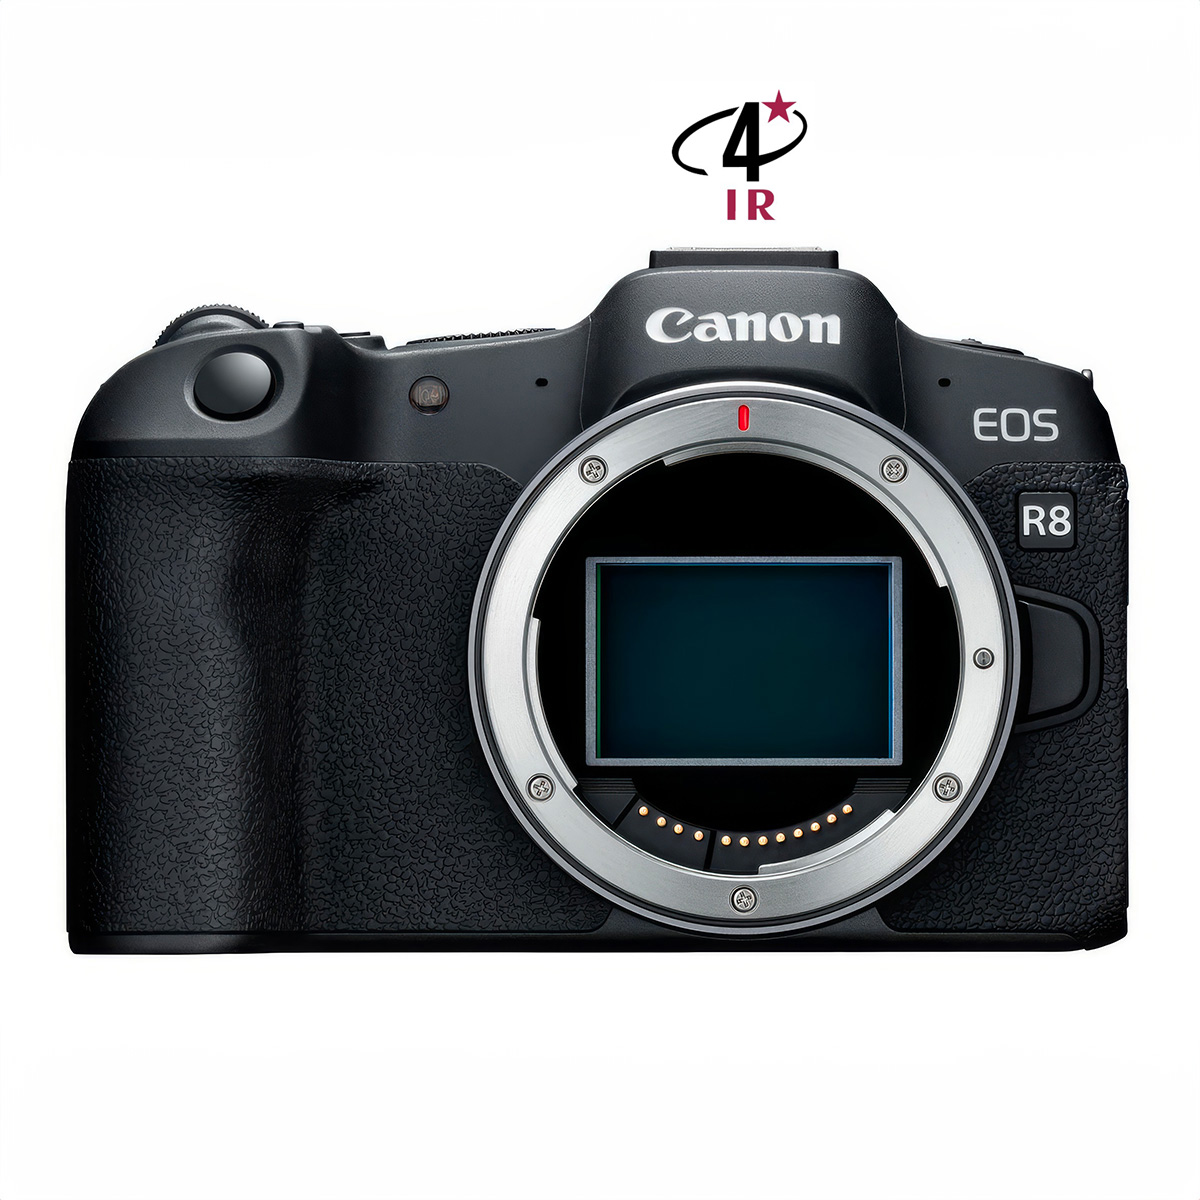 Hybride Canon EOS R8 neuf défiltré + refiltré 4'IR APN neufs 4'IR